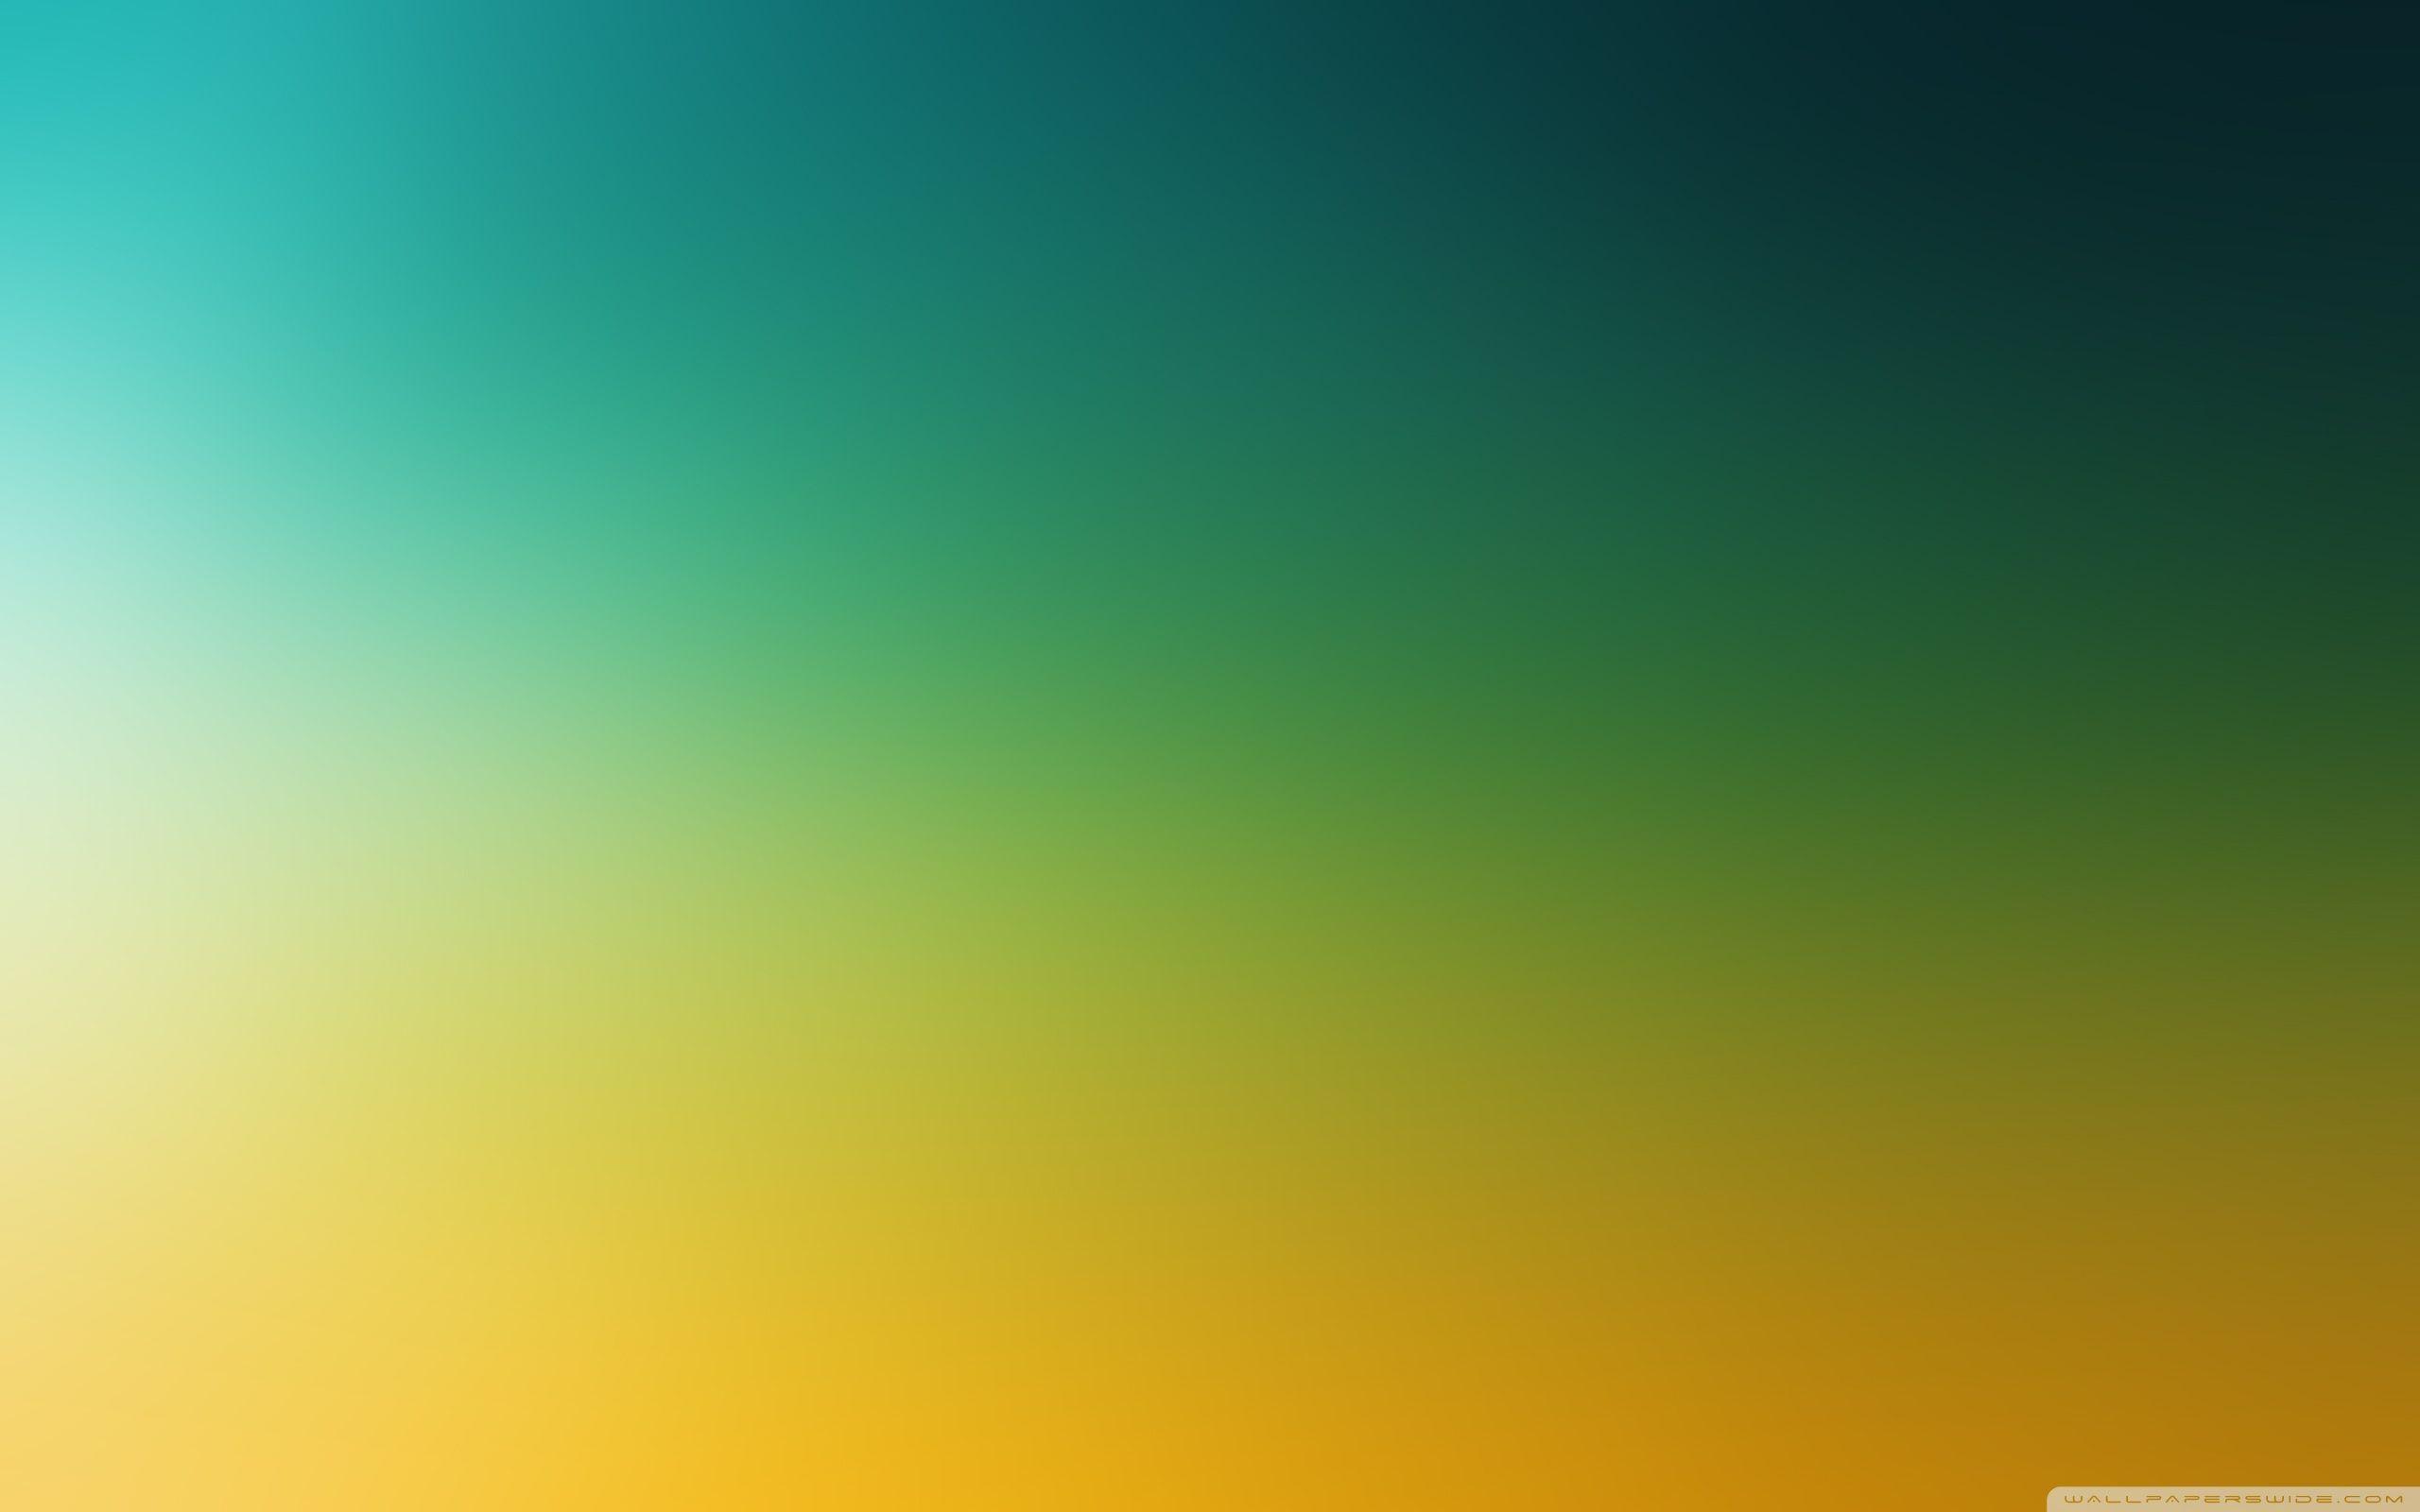 Yellow Green Blue Ultra HD Desktop Background Wallpaper for 4K UHD TV, Tablet